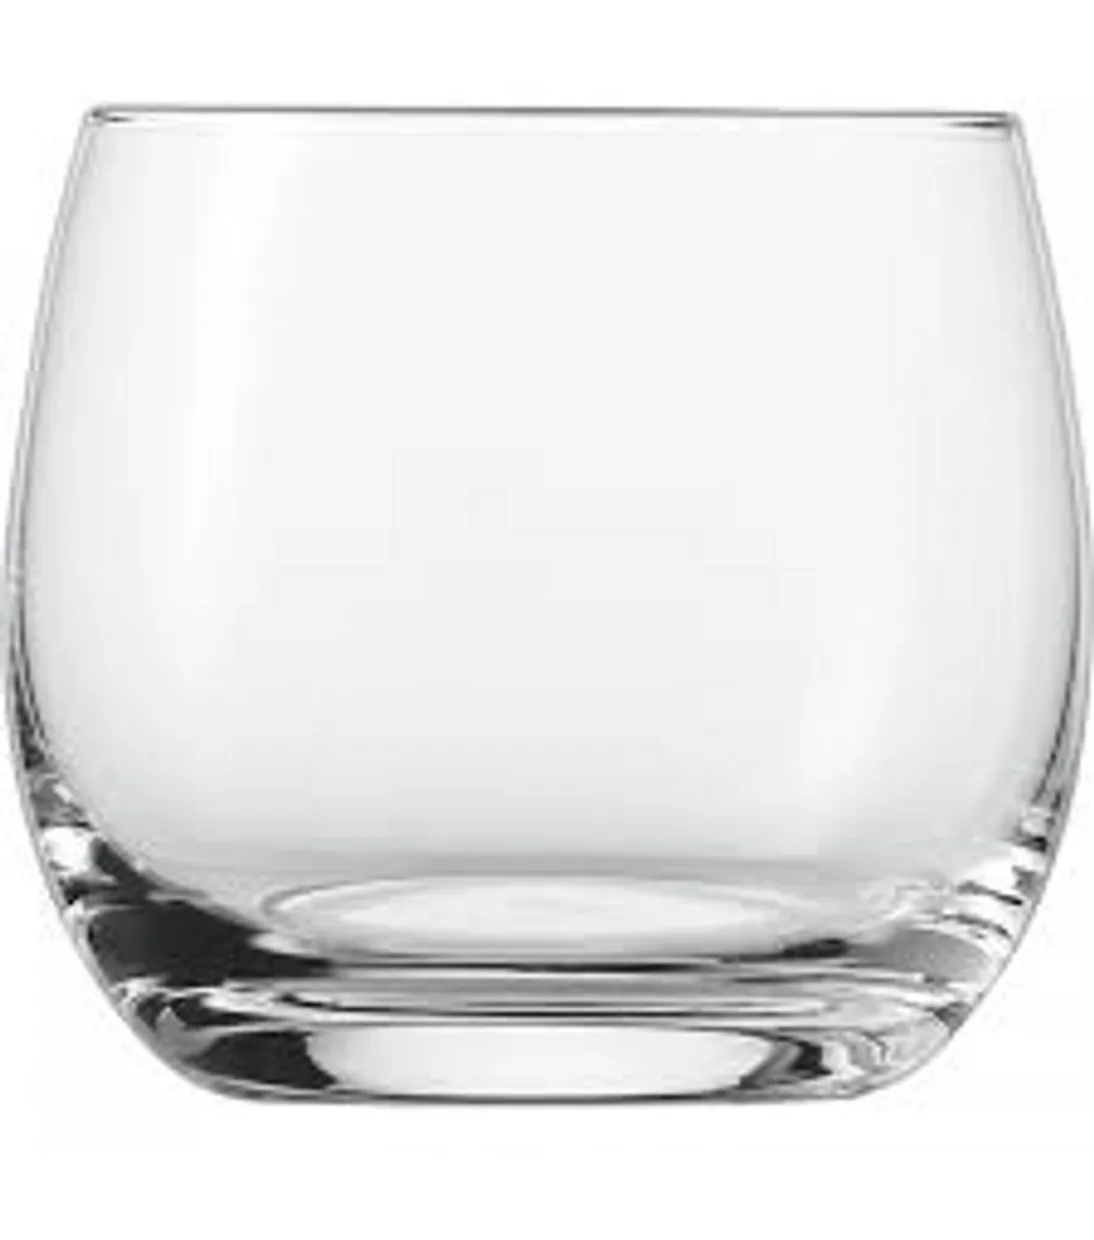 Whiskyglas 400 ml Banquet